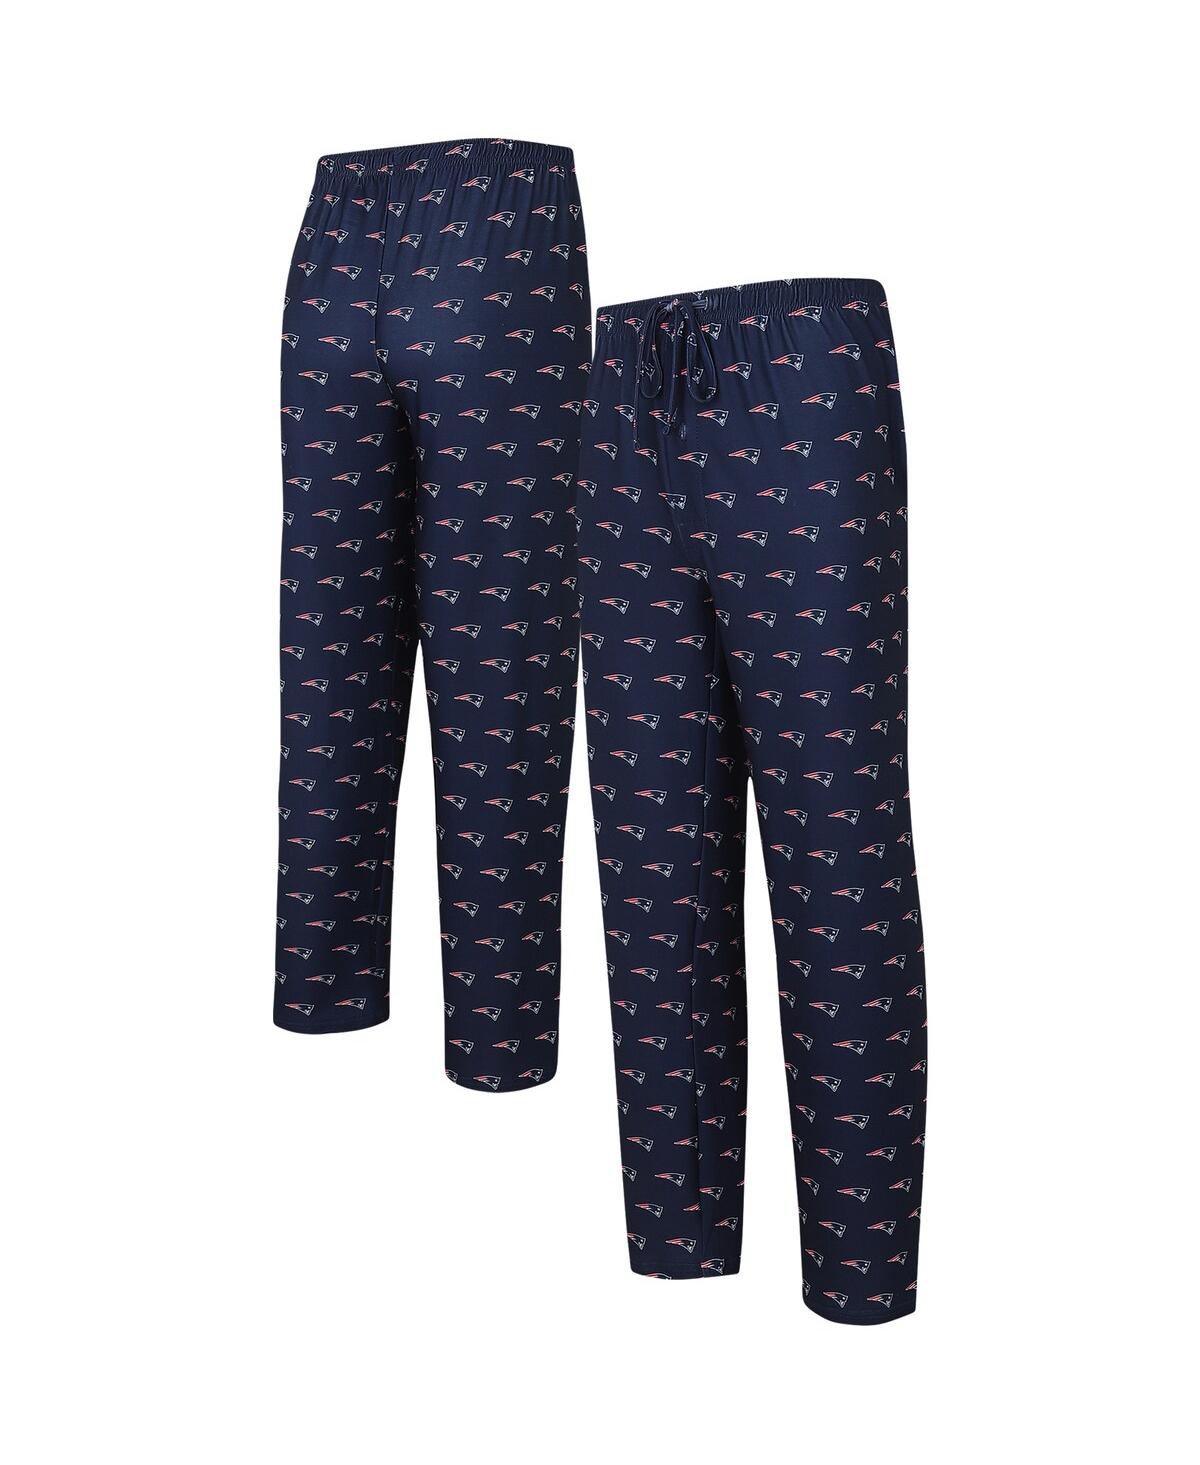 Concepts Sport Men's  Navy New England Patriots Gauge Allover Print Knit Pants